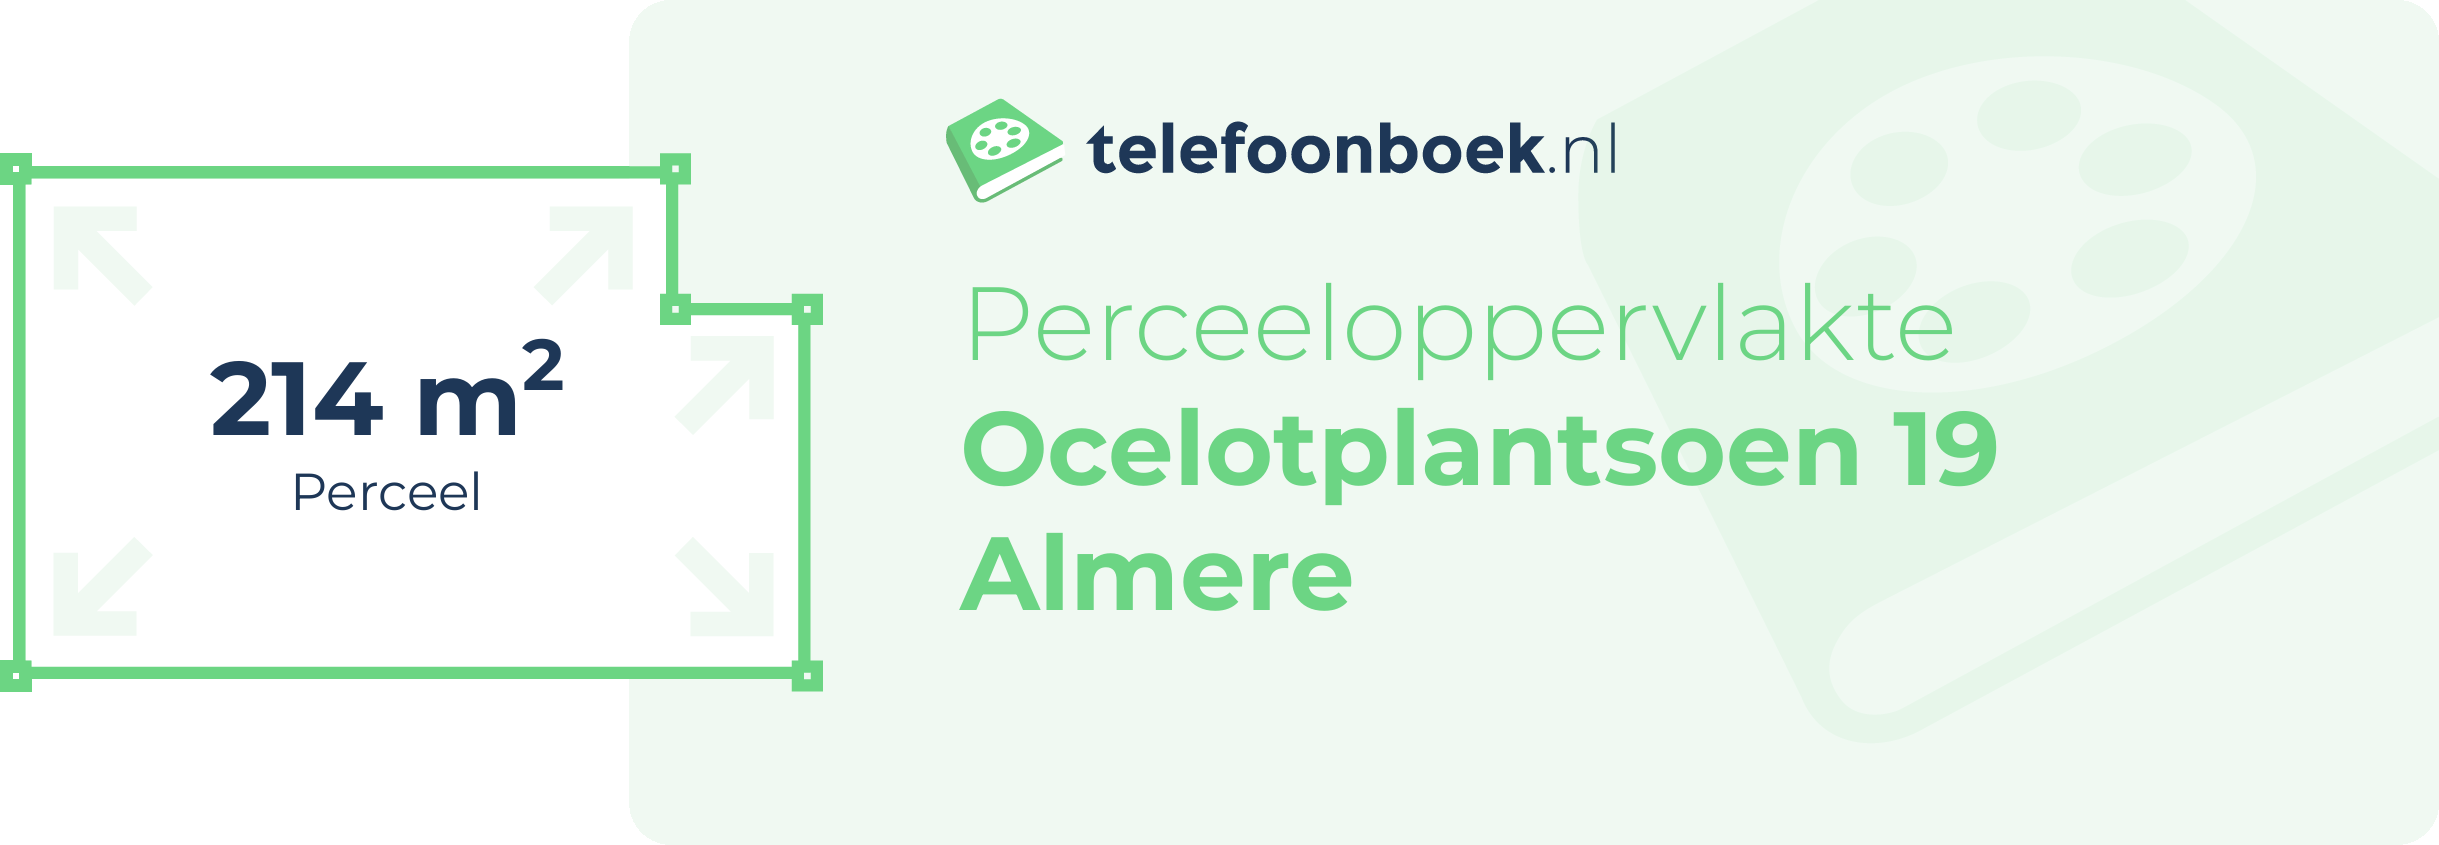 Perceeloppervlakte Ocelotplantsoen 19 Almere